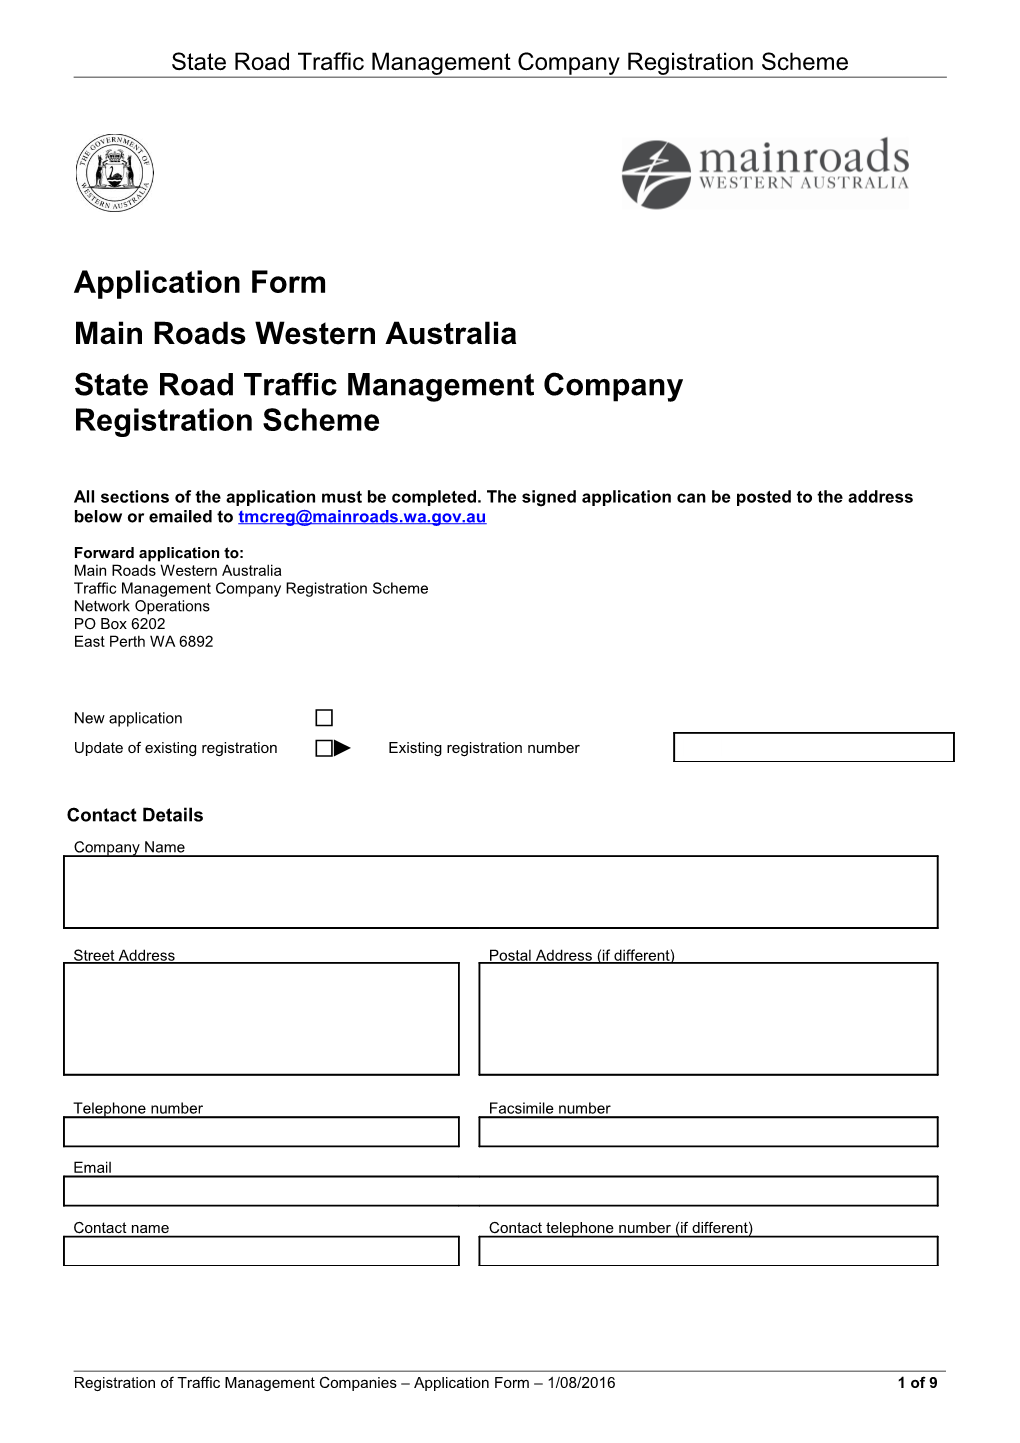 State Road Traffic Management Company Registration Scheme